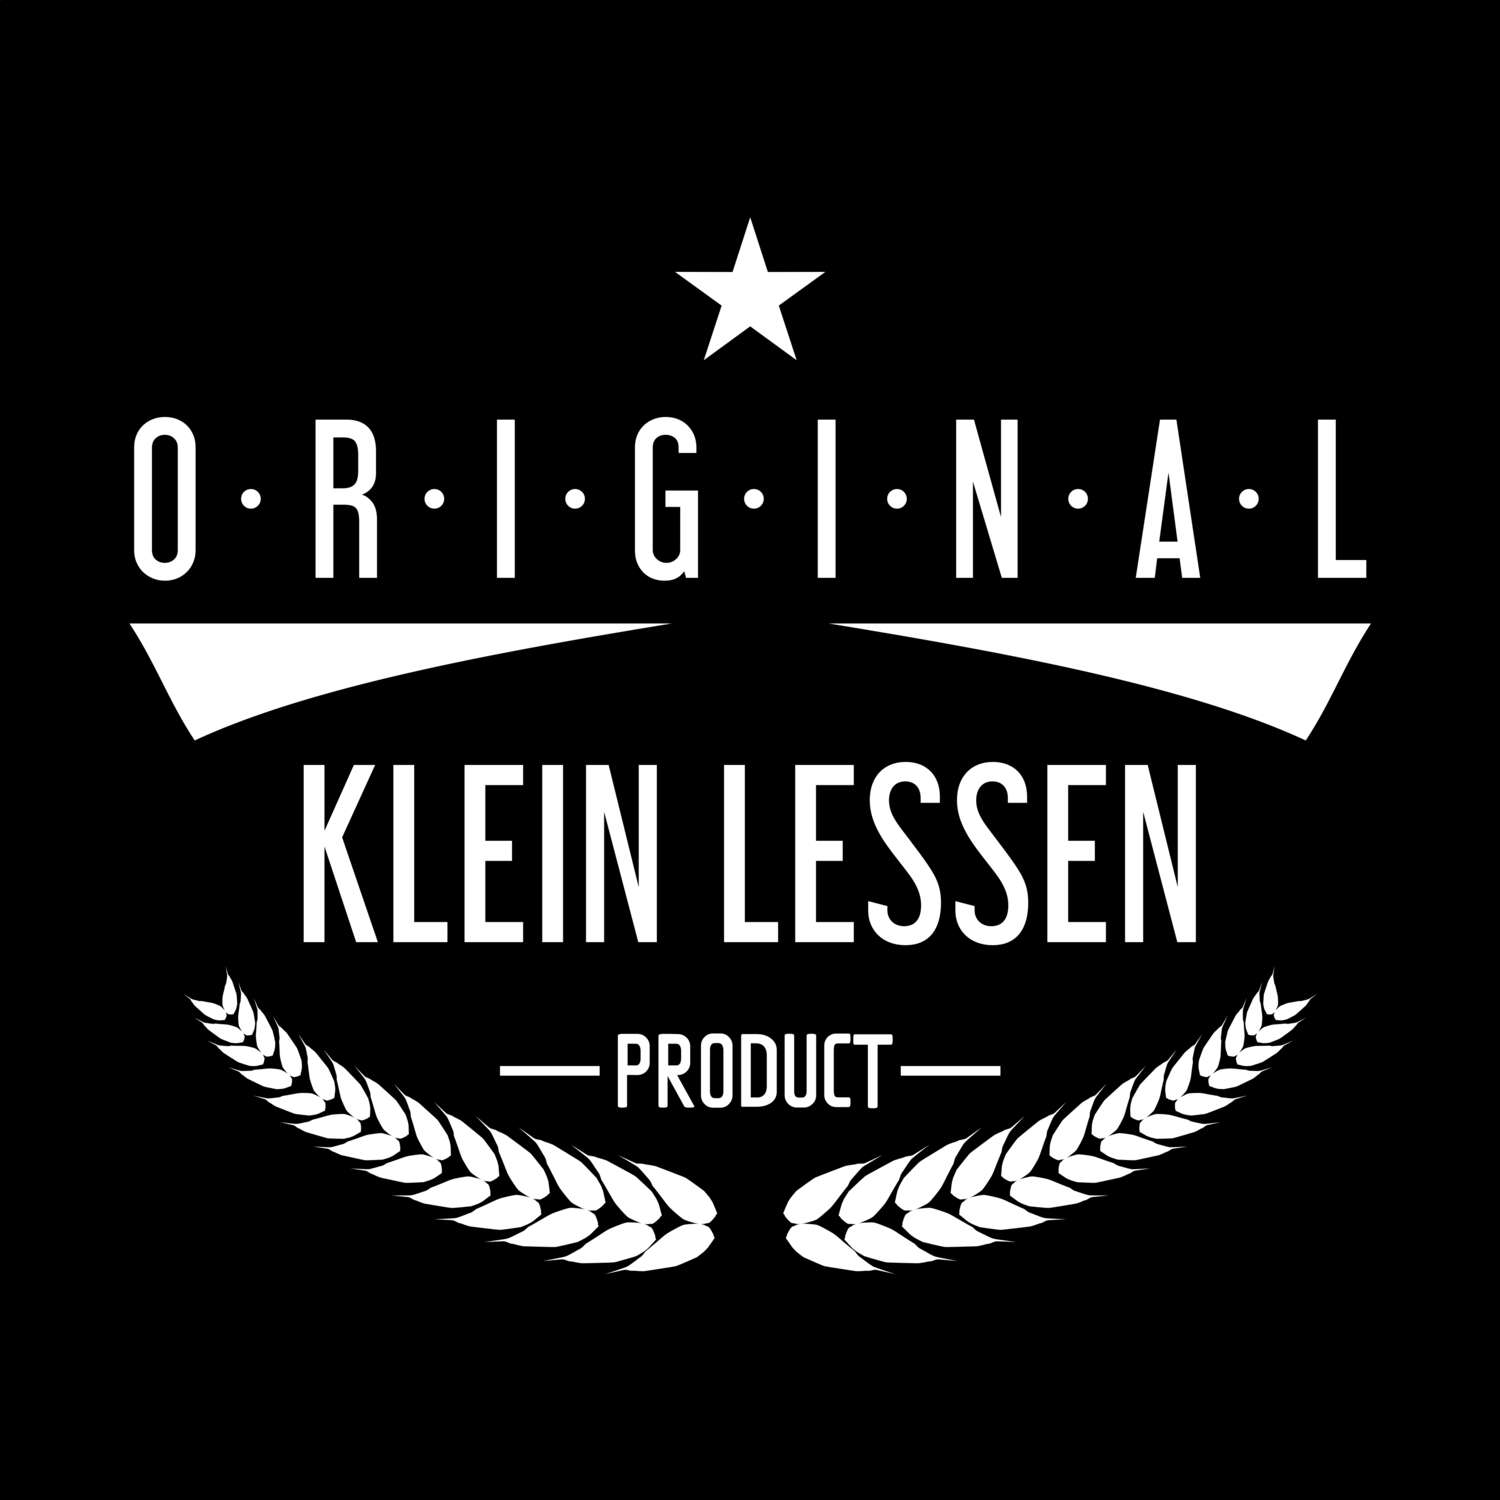 Klein Lessen T-Shirt »Original Product«